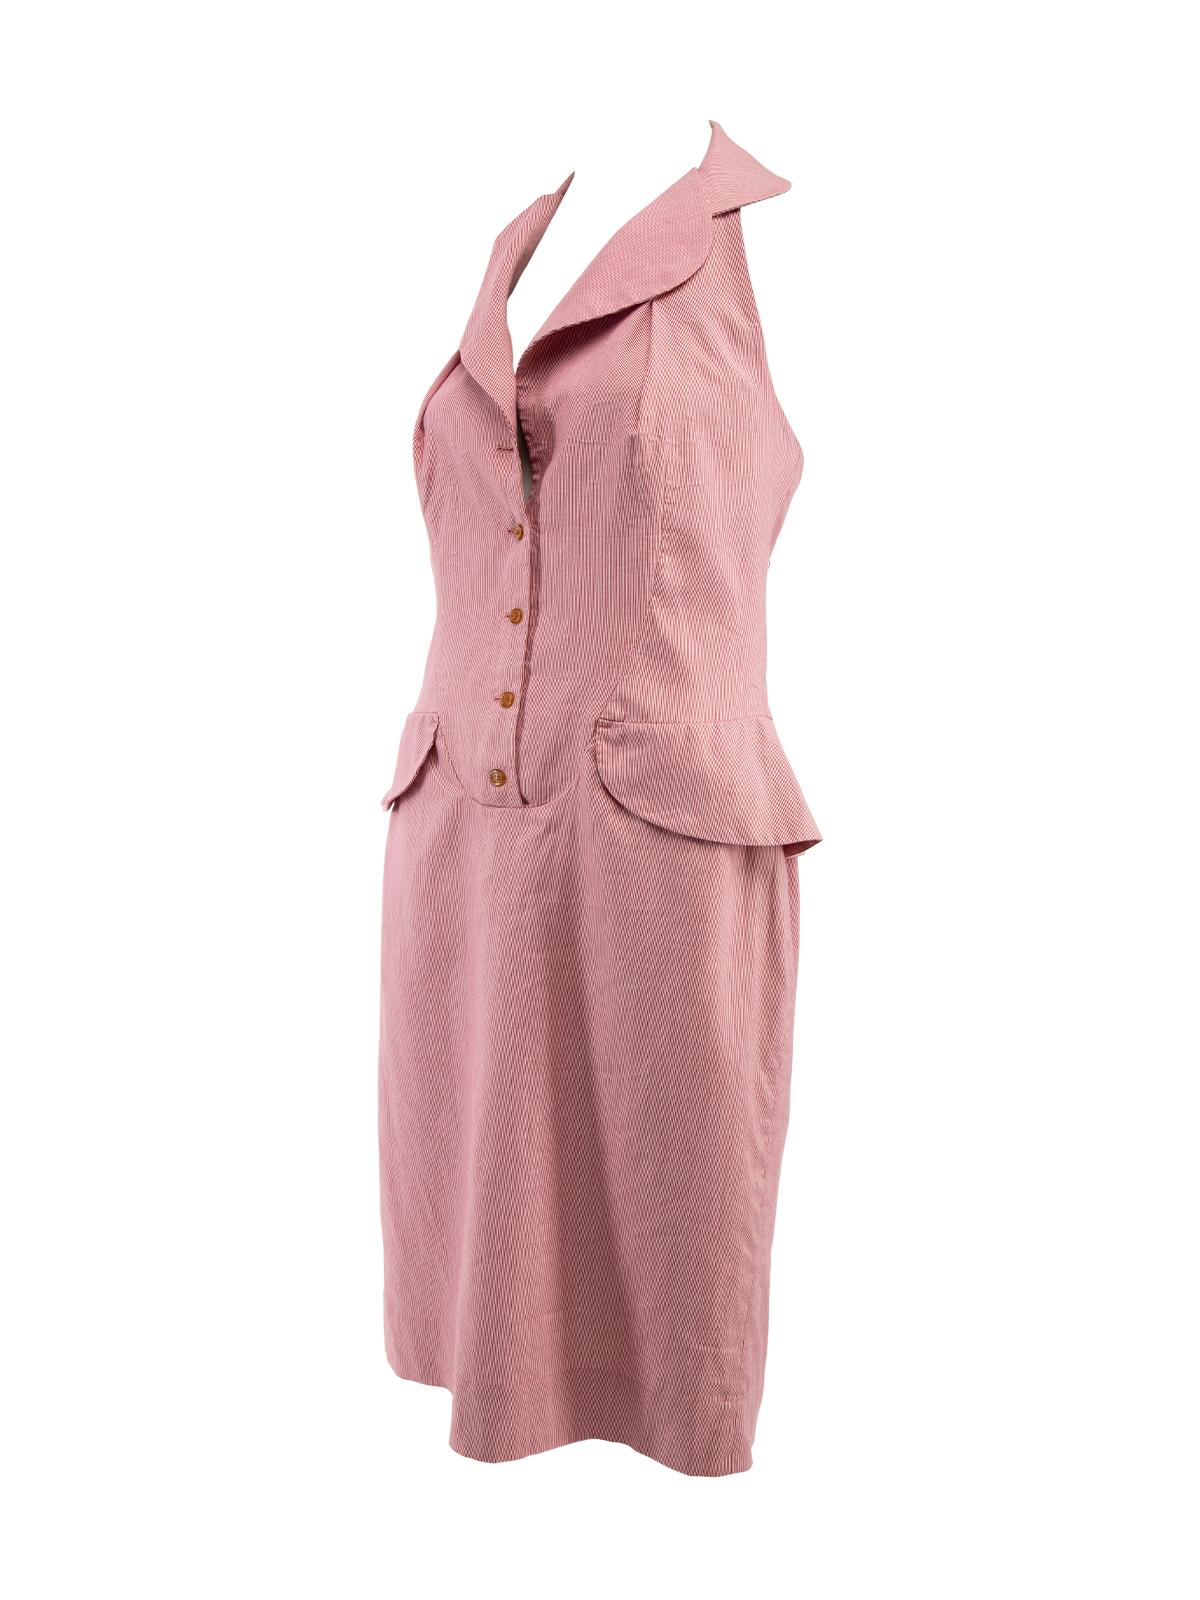 Pre-Loved Vivienne Westwood Women's Halter Neck Dress with Pockets 1